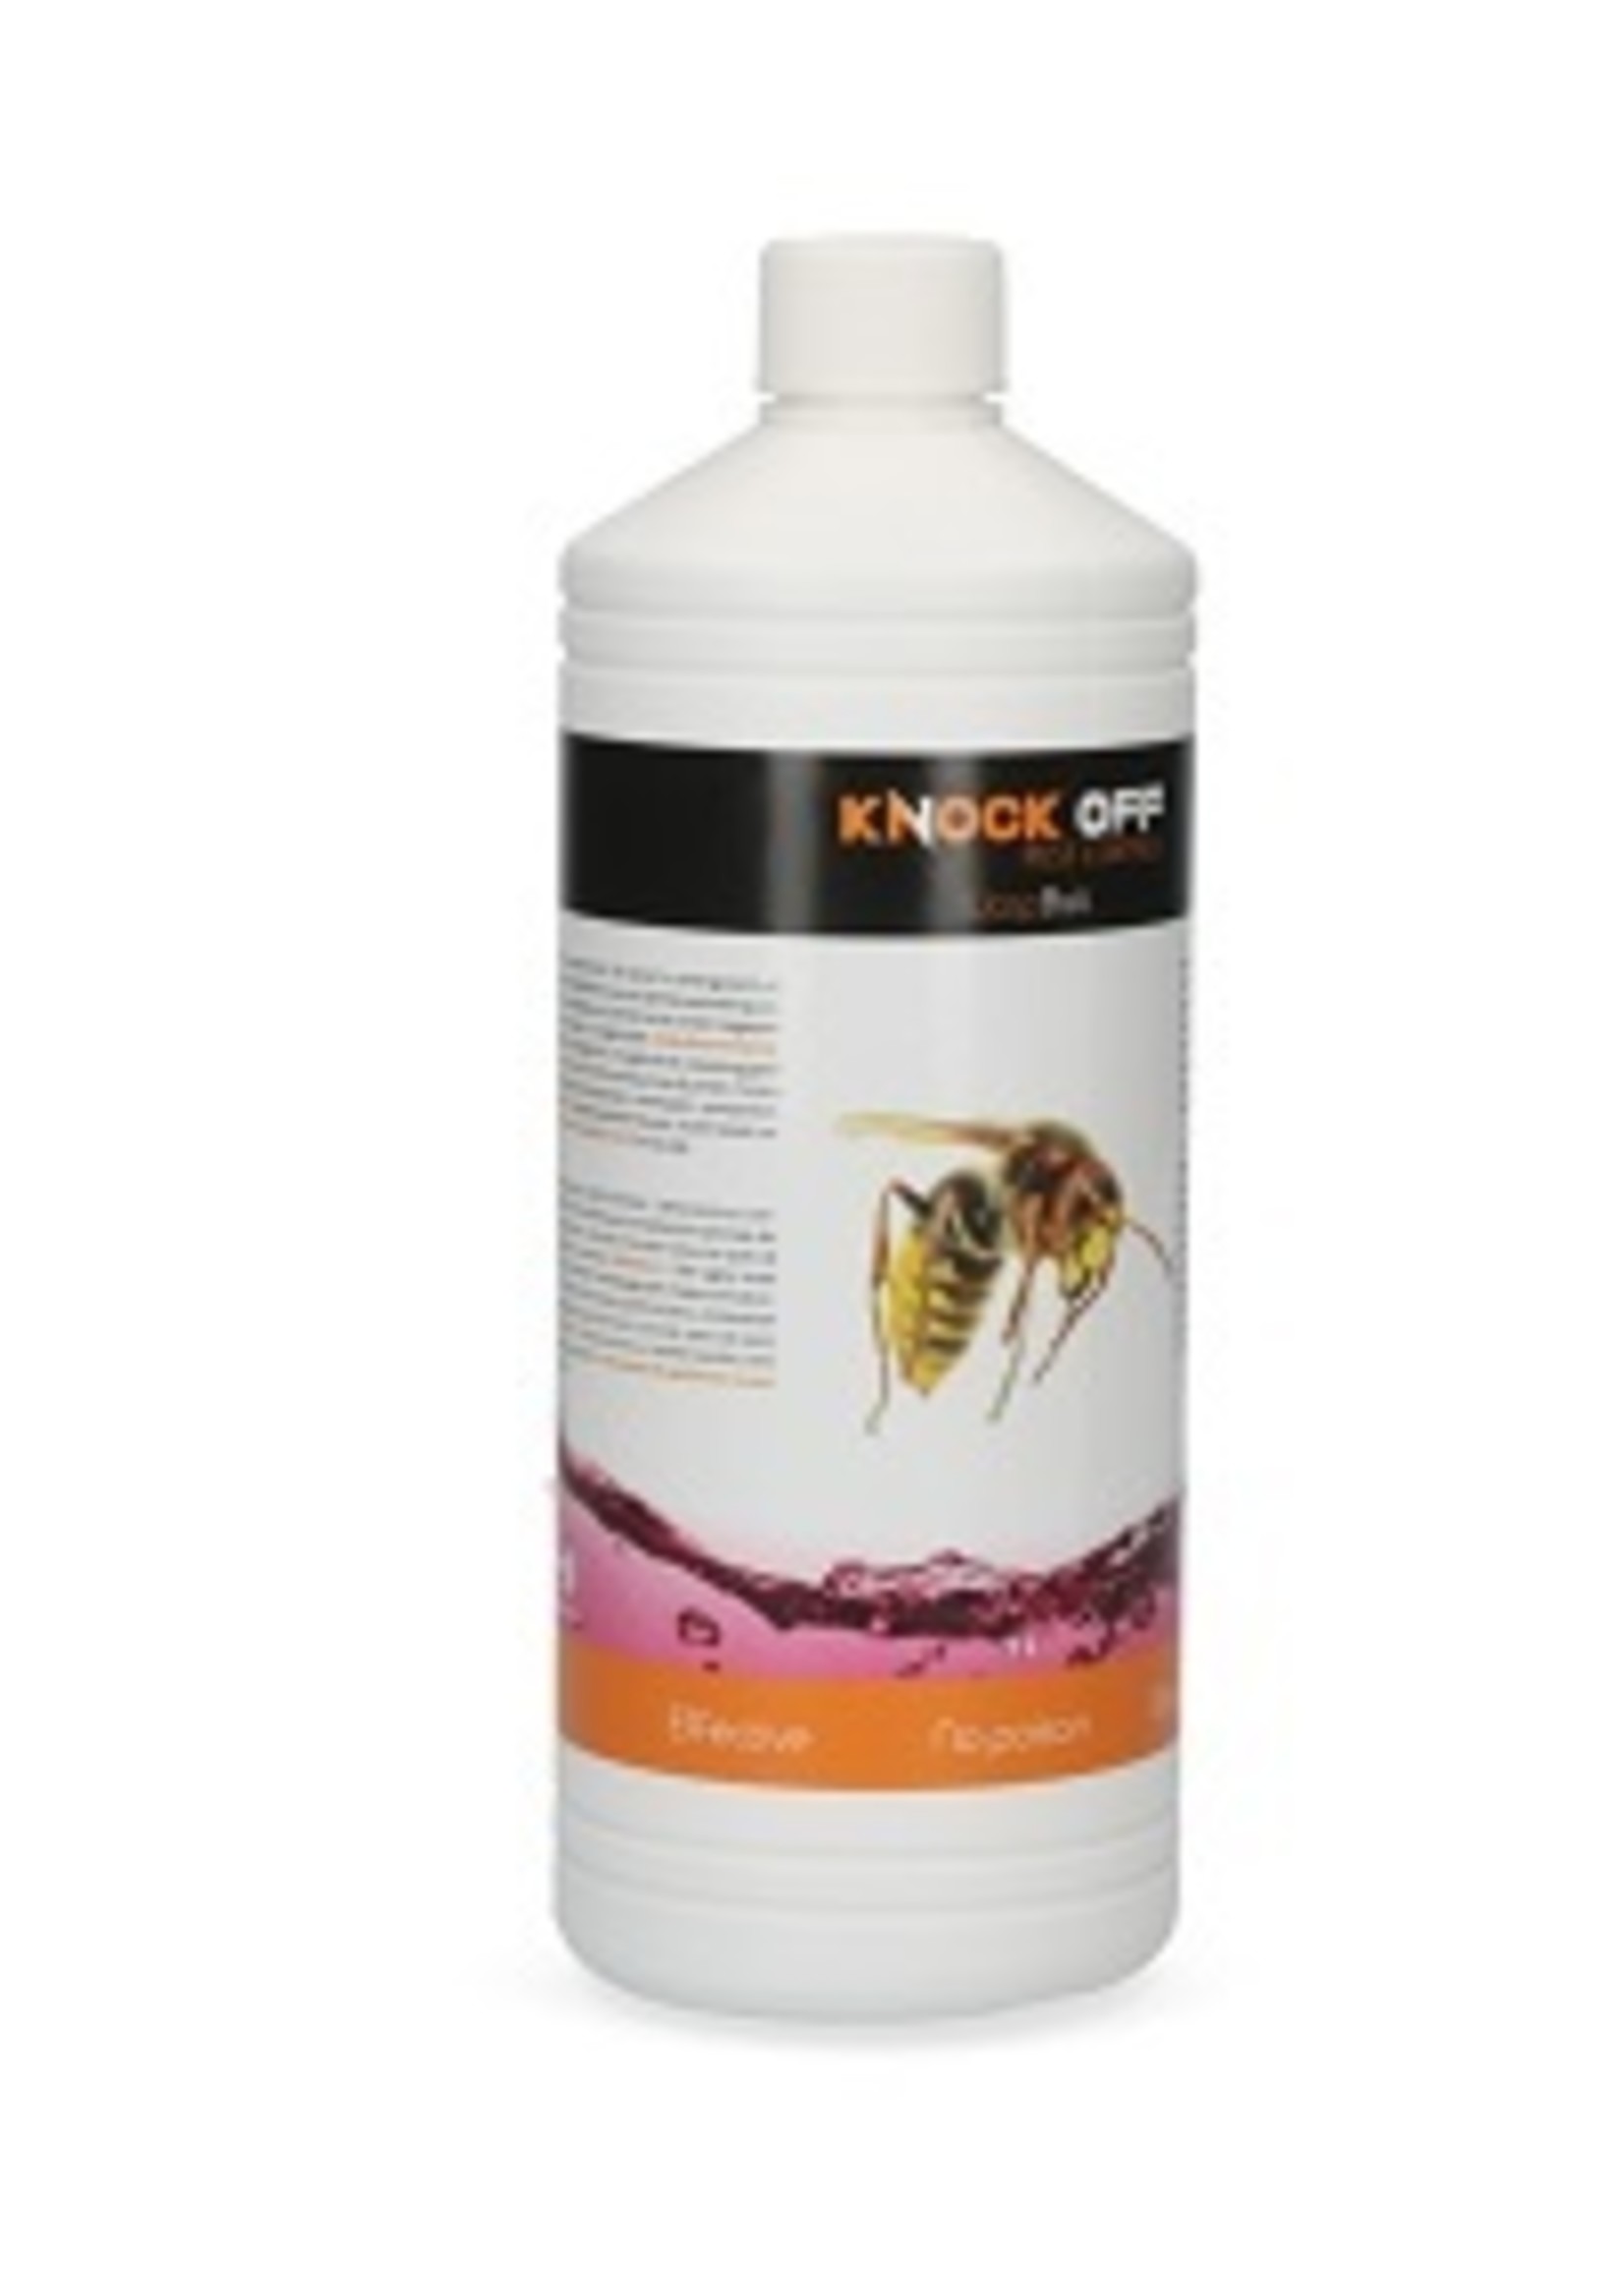 Knock Off Wasp Bait, 1 liter